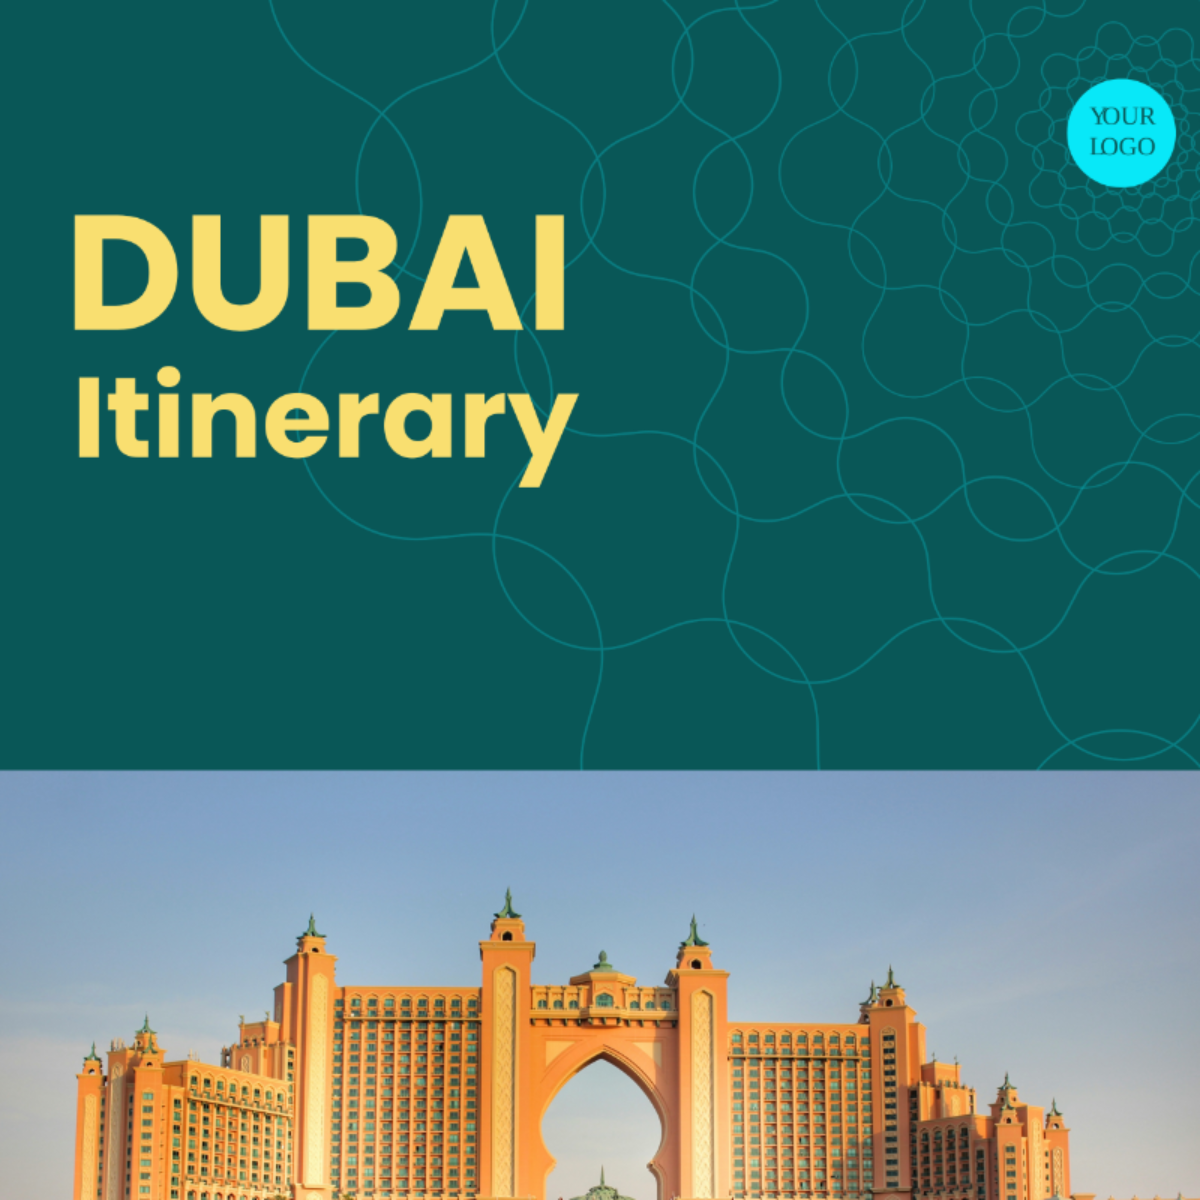 Dubai Itinerary Template